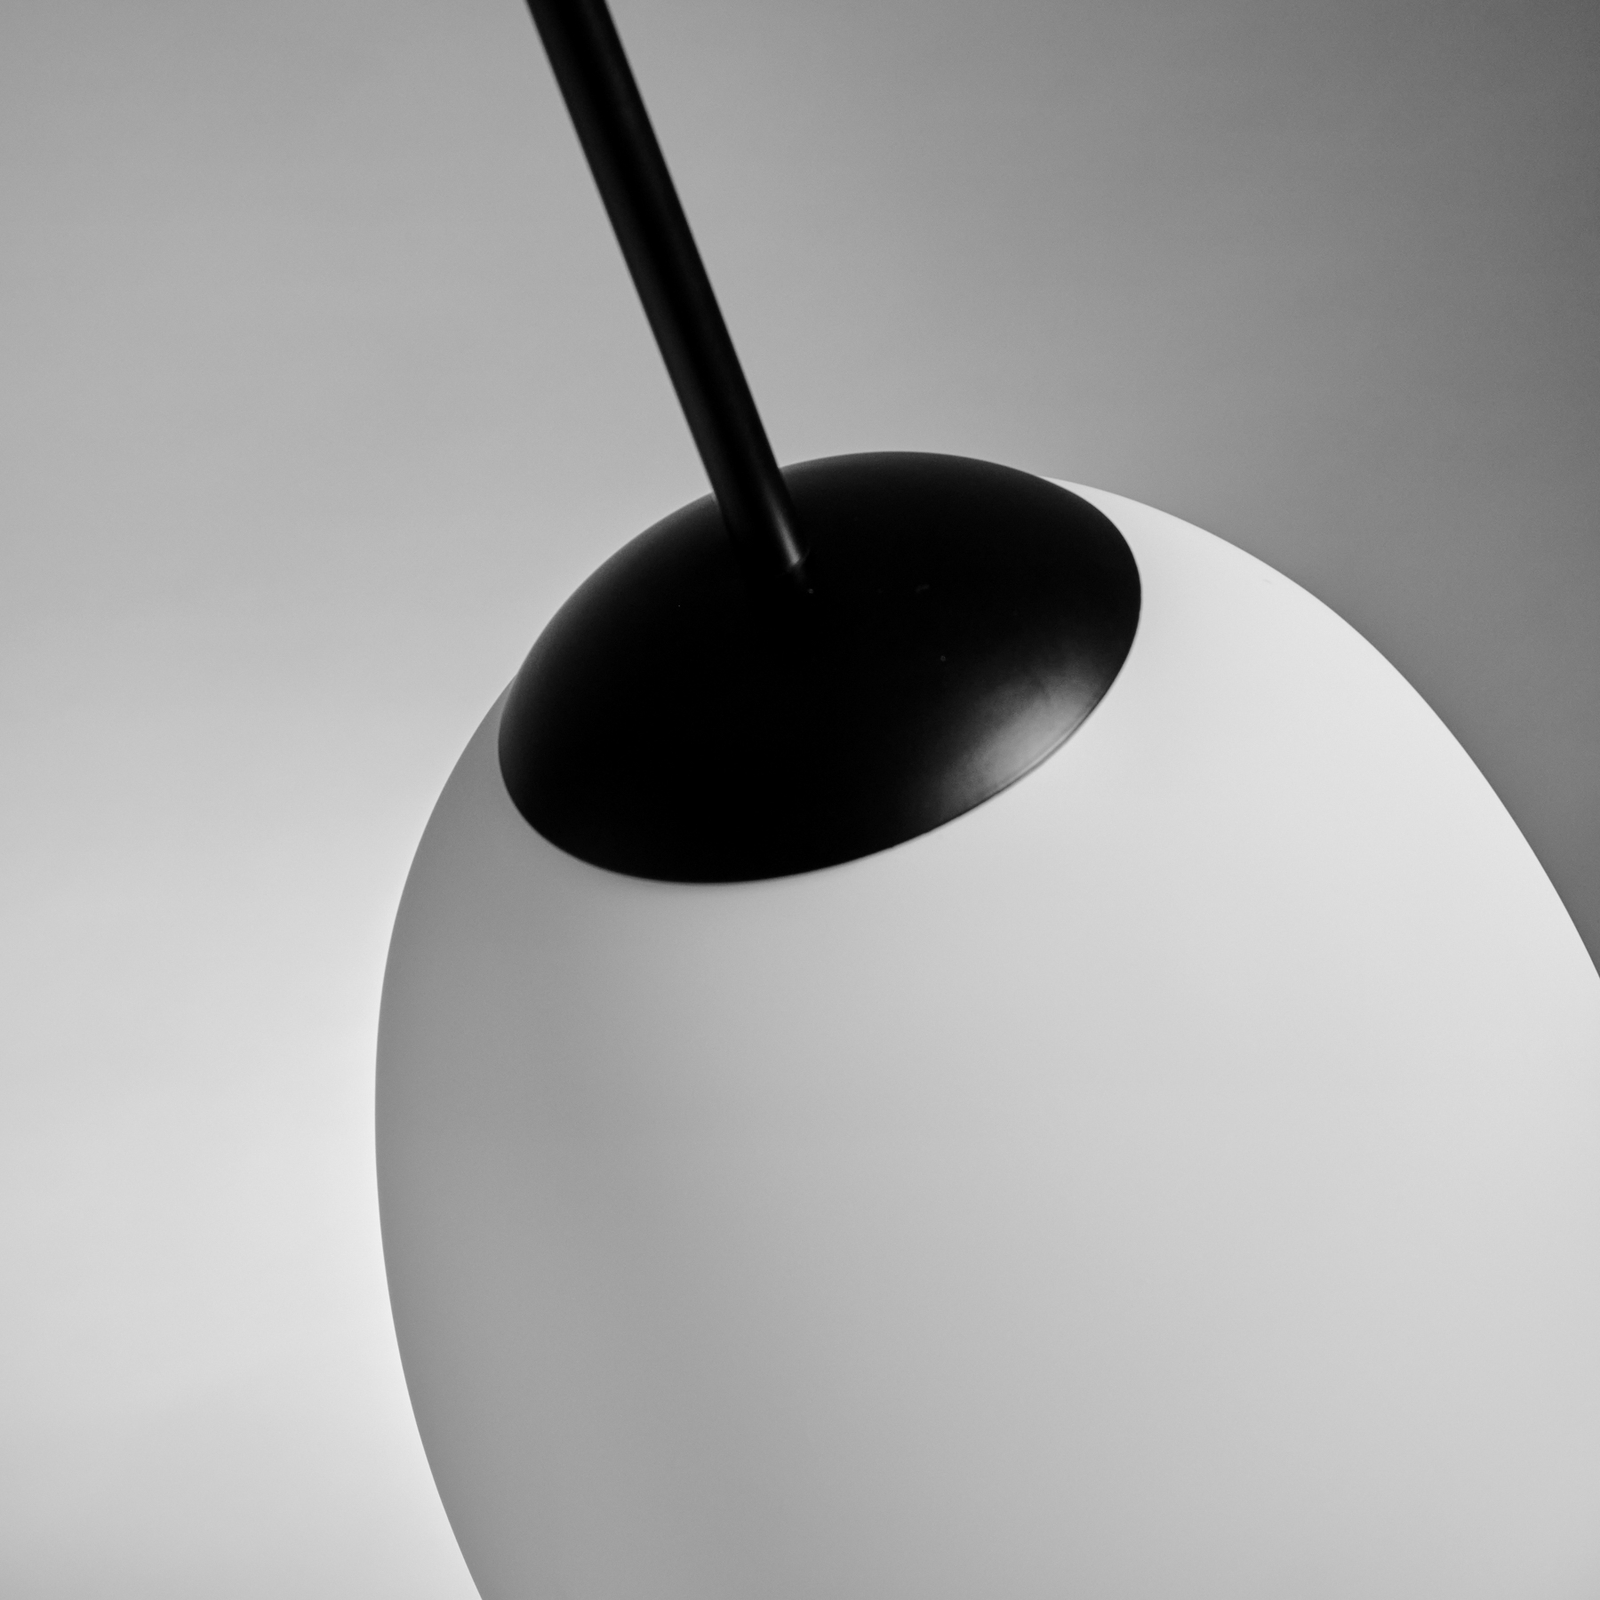 Hanglamp Drop, matglas, ophanging zwart